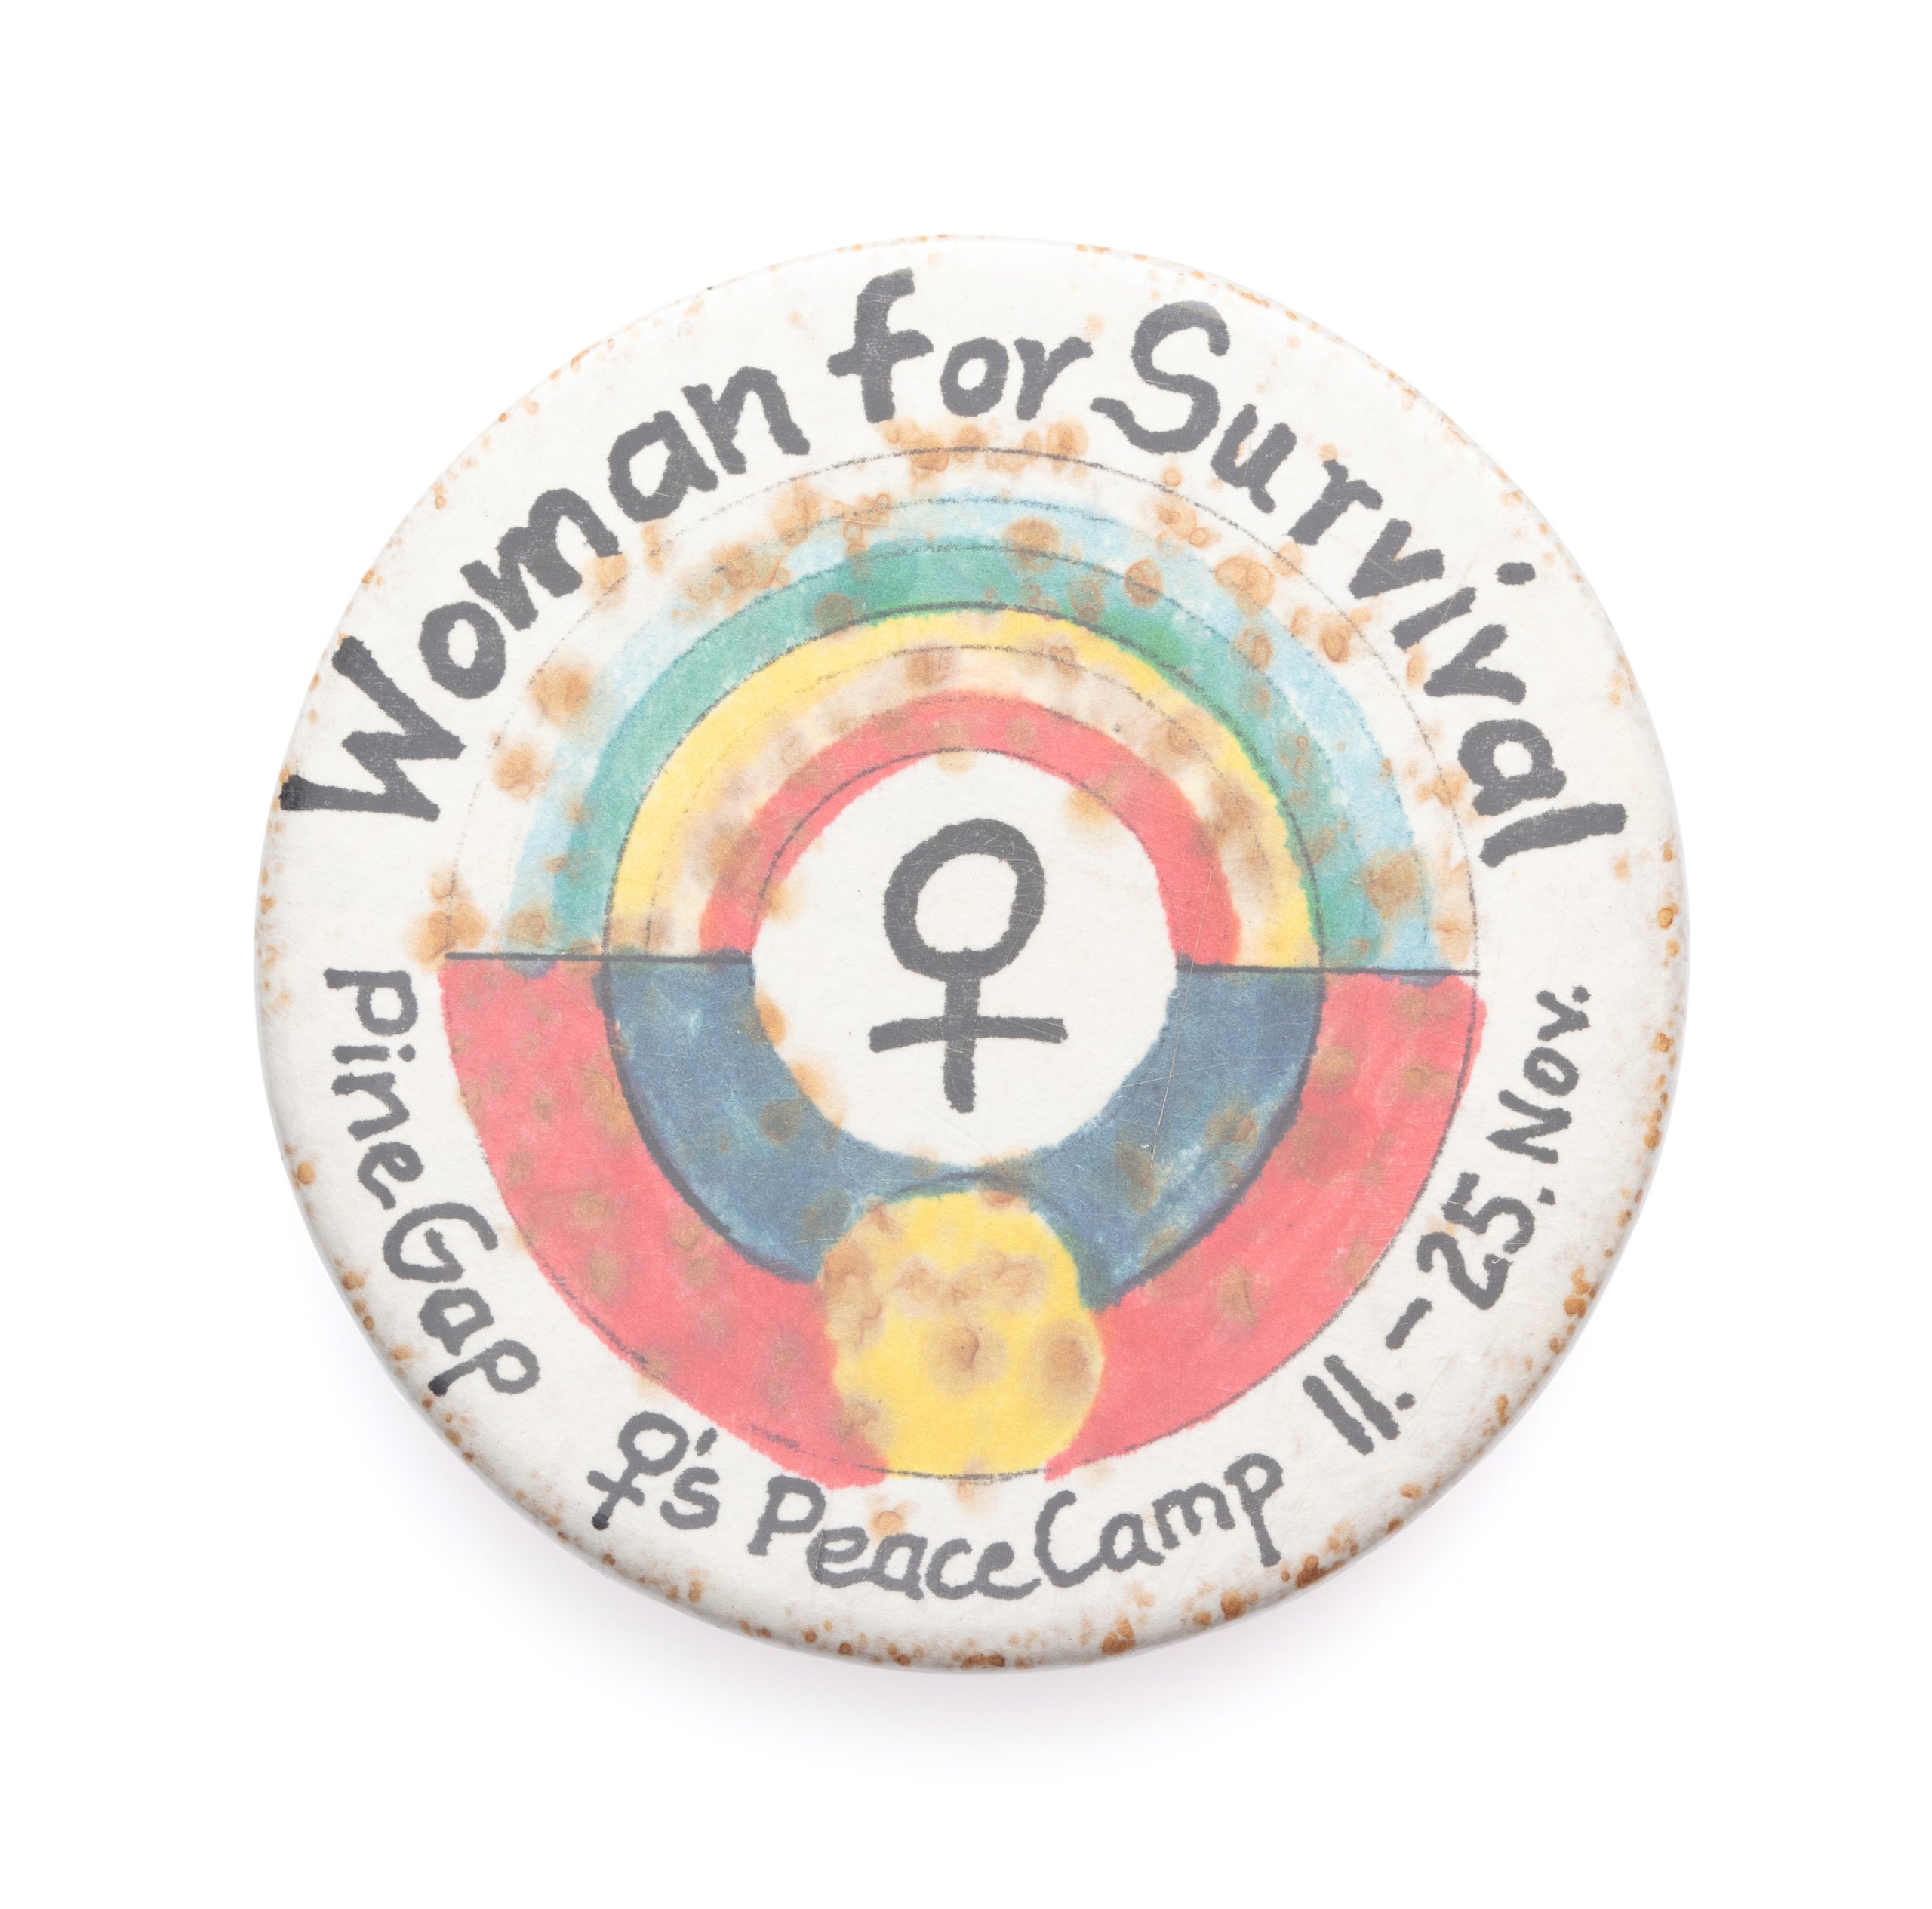 'Women for Survival' badge